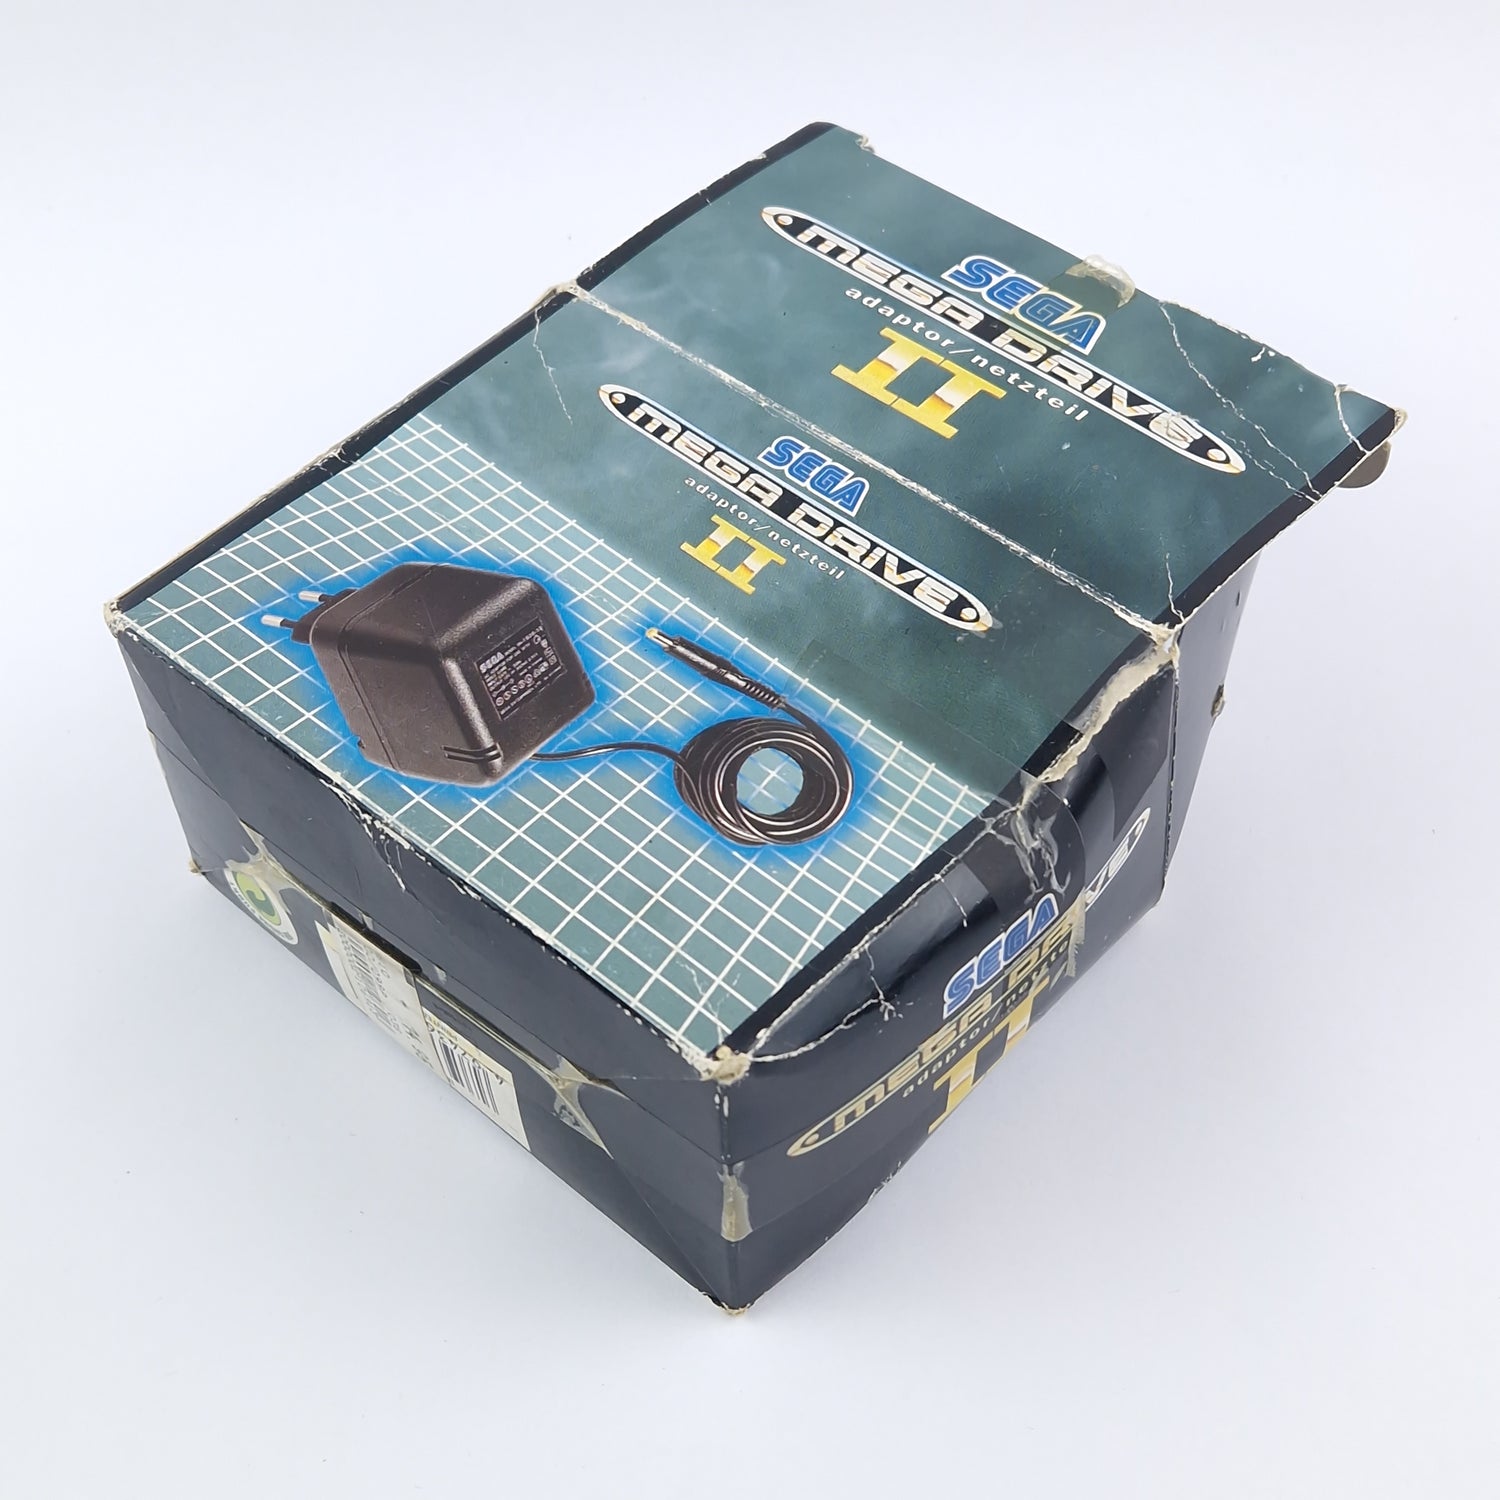 Sega Mega Drive II 2 Zubehör Artikel : Adaptor / Netzteil - Kabel Cable OVP PAL